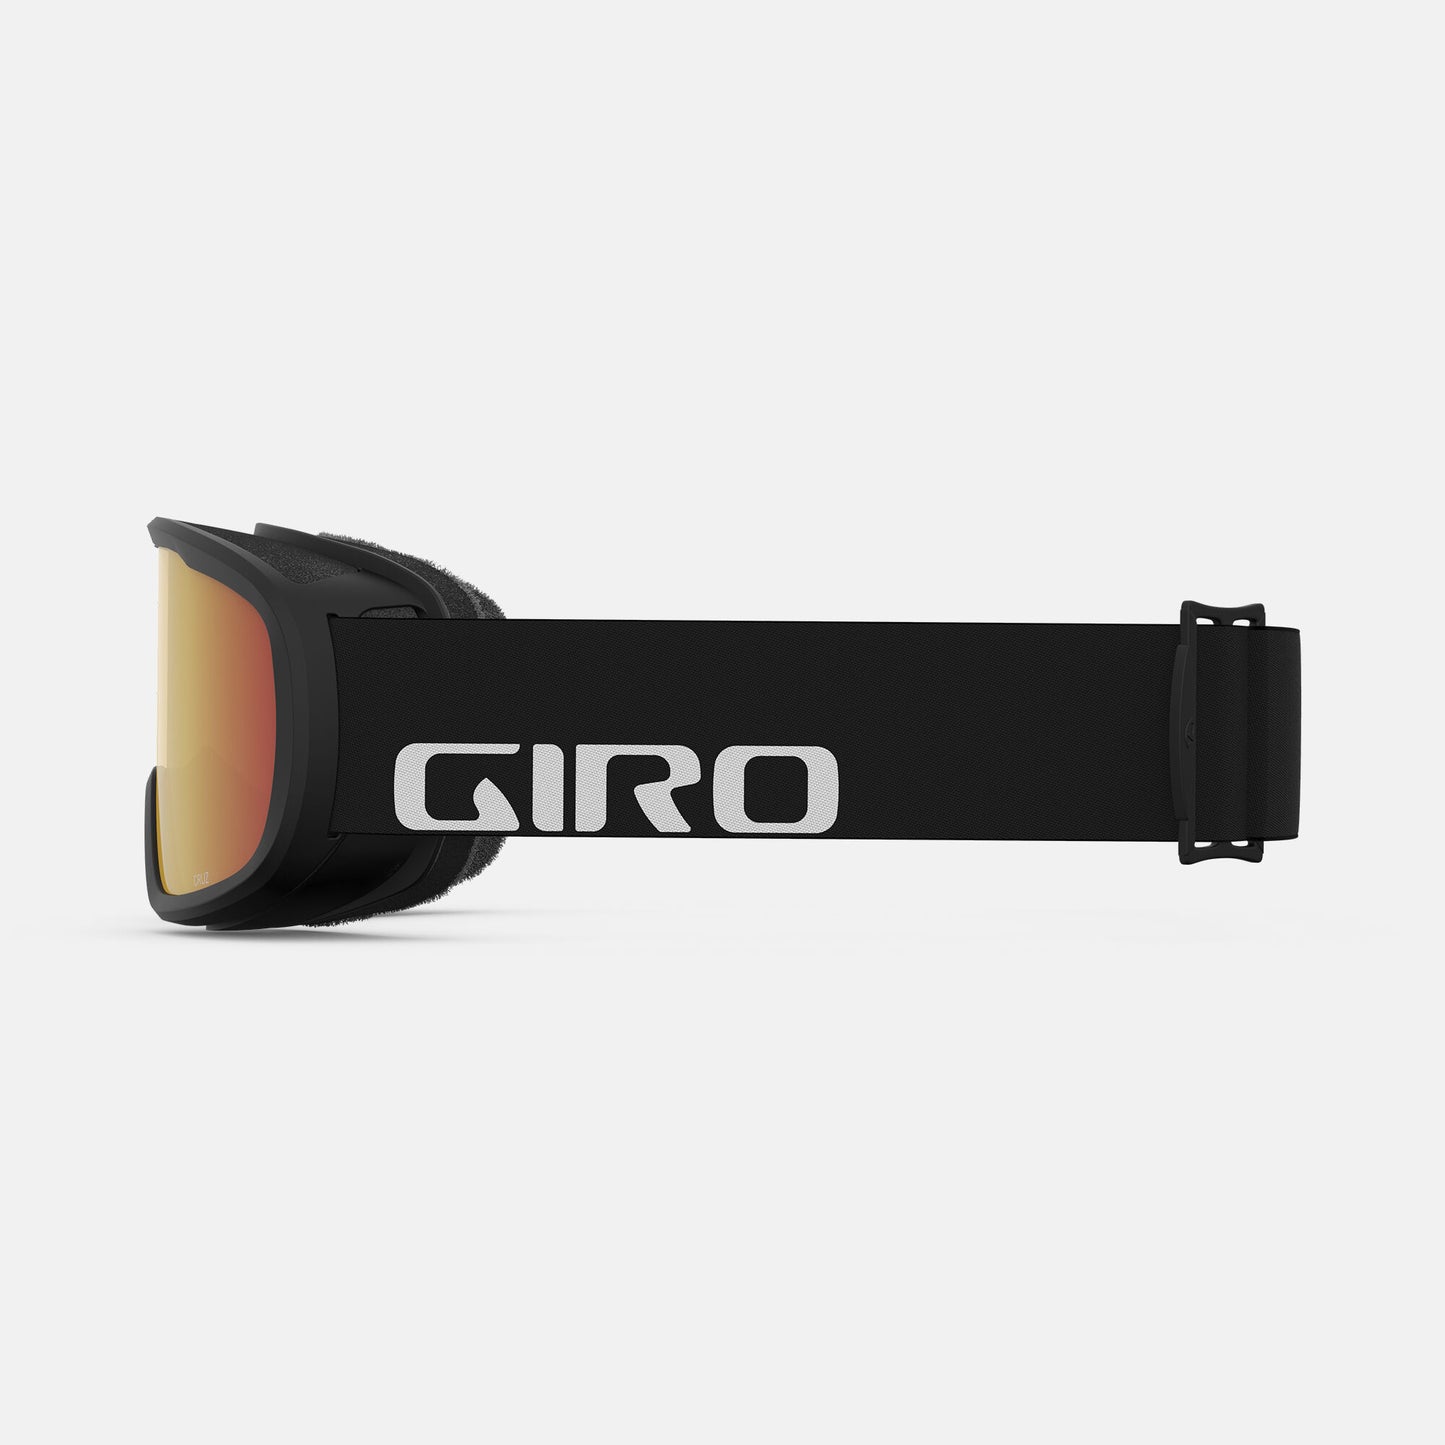 Giro Cruz Snow Goggles Black Wordmark Amber Scarlet Snow Goggles